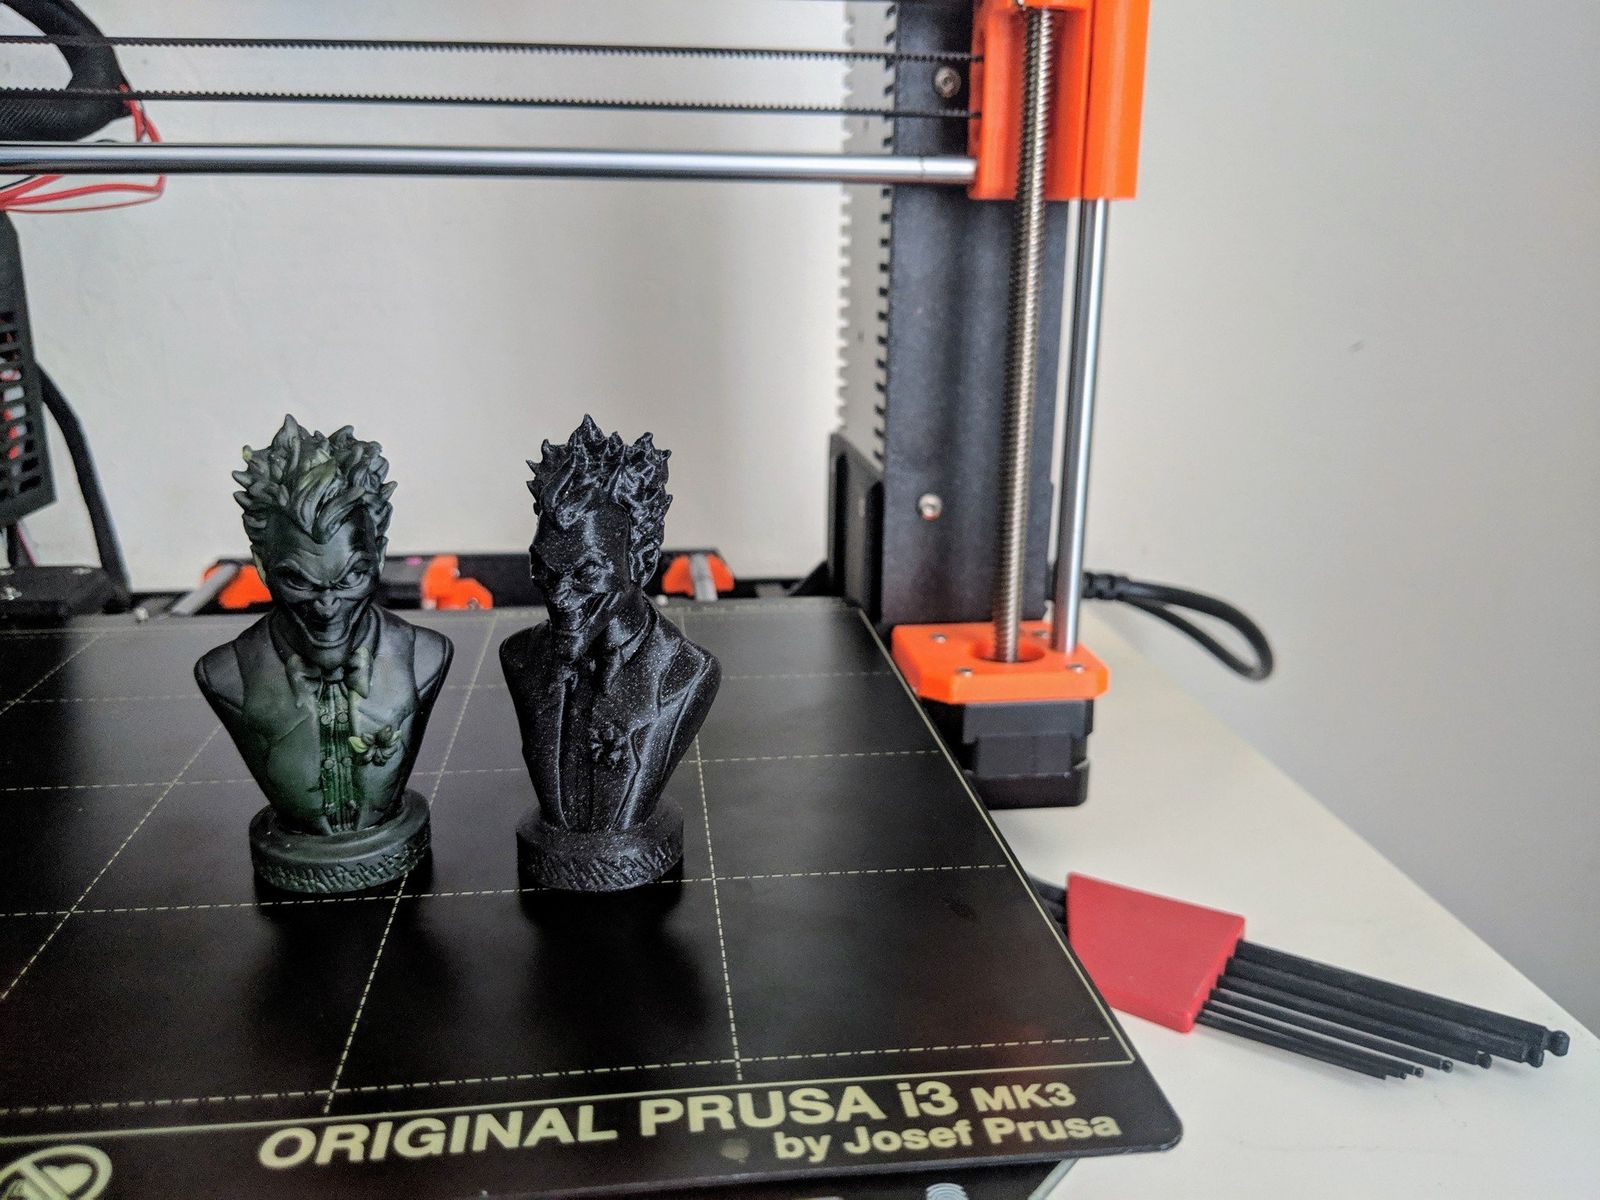 Choosing between resin or filament 3D printing is tough, but we can help!